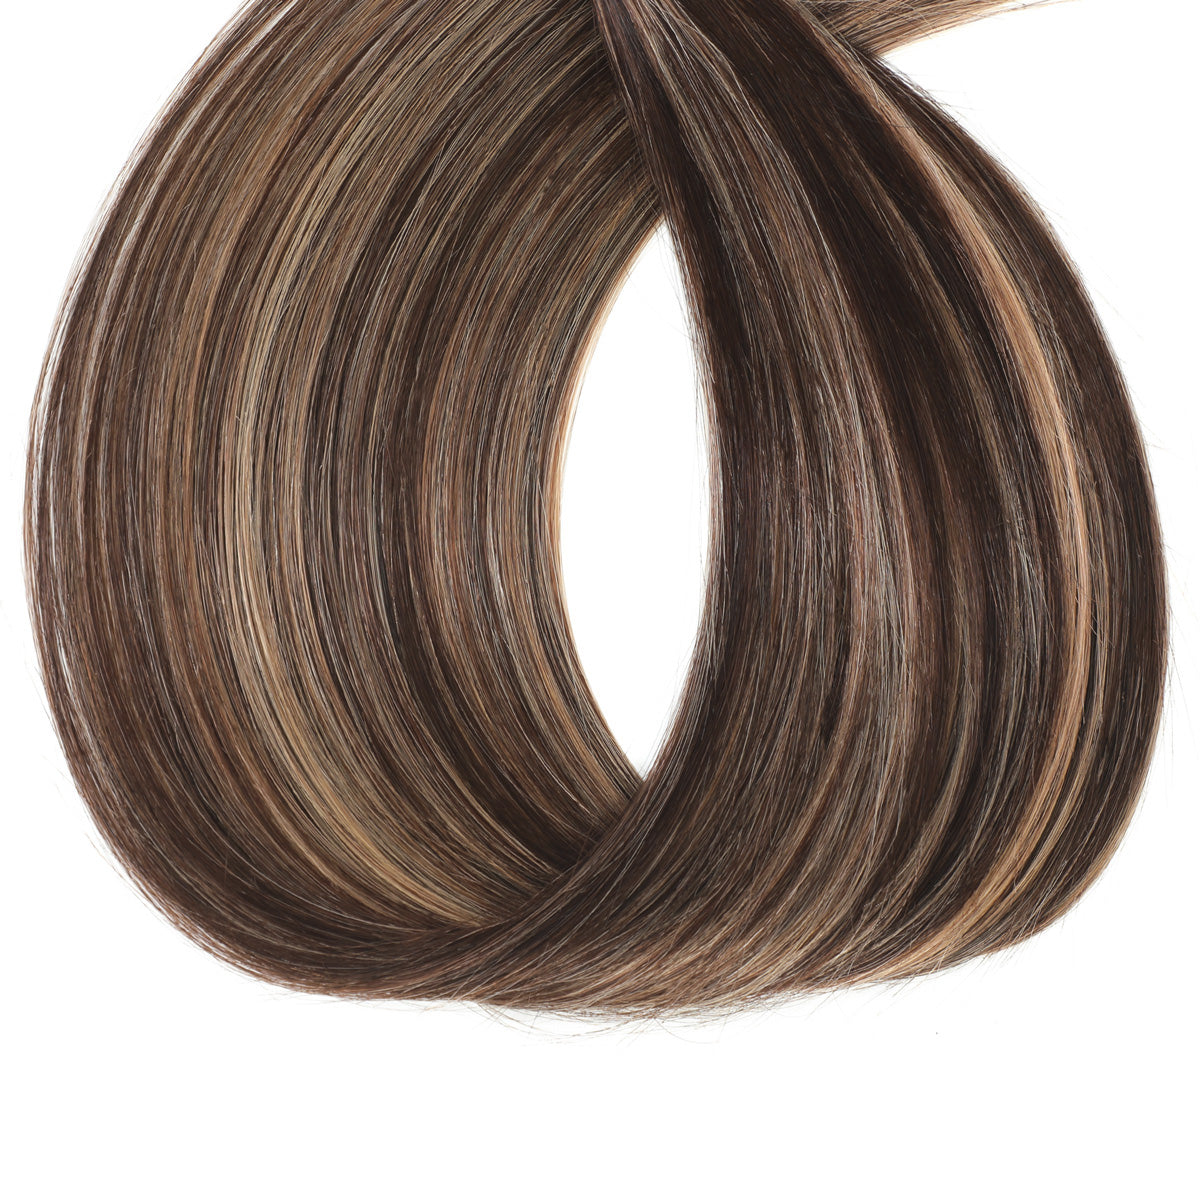 Weft Hair Extensions #2/16 Dark Brown & Natural Blonde Mix 17” 60 Grams